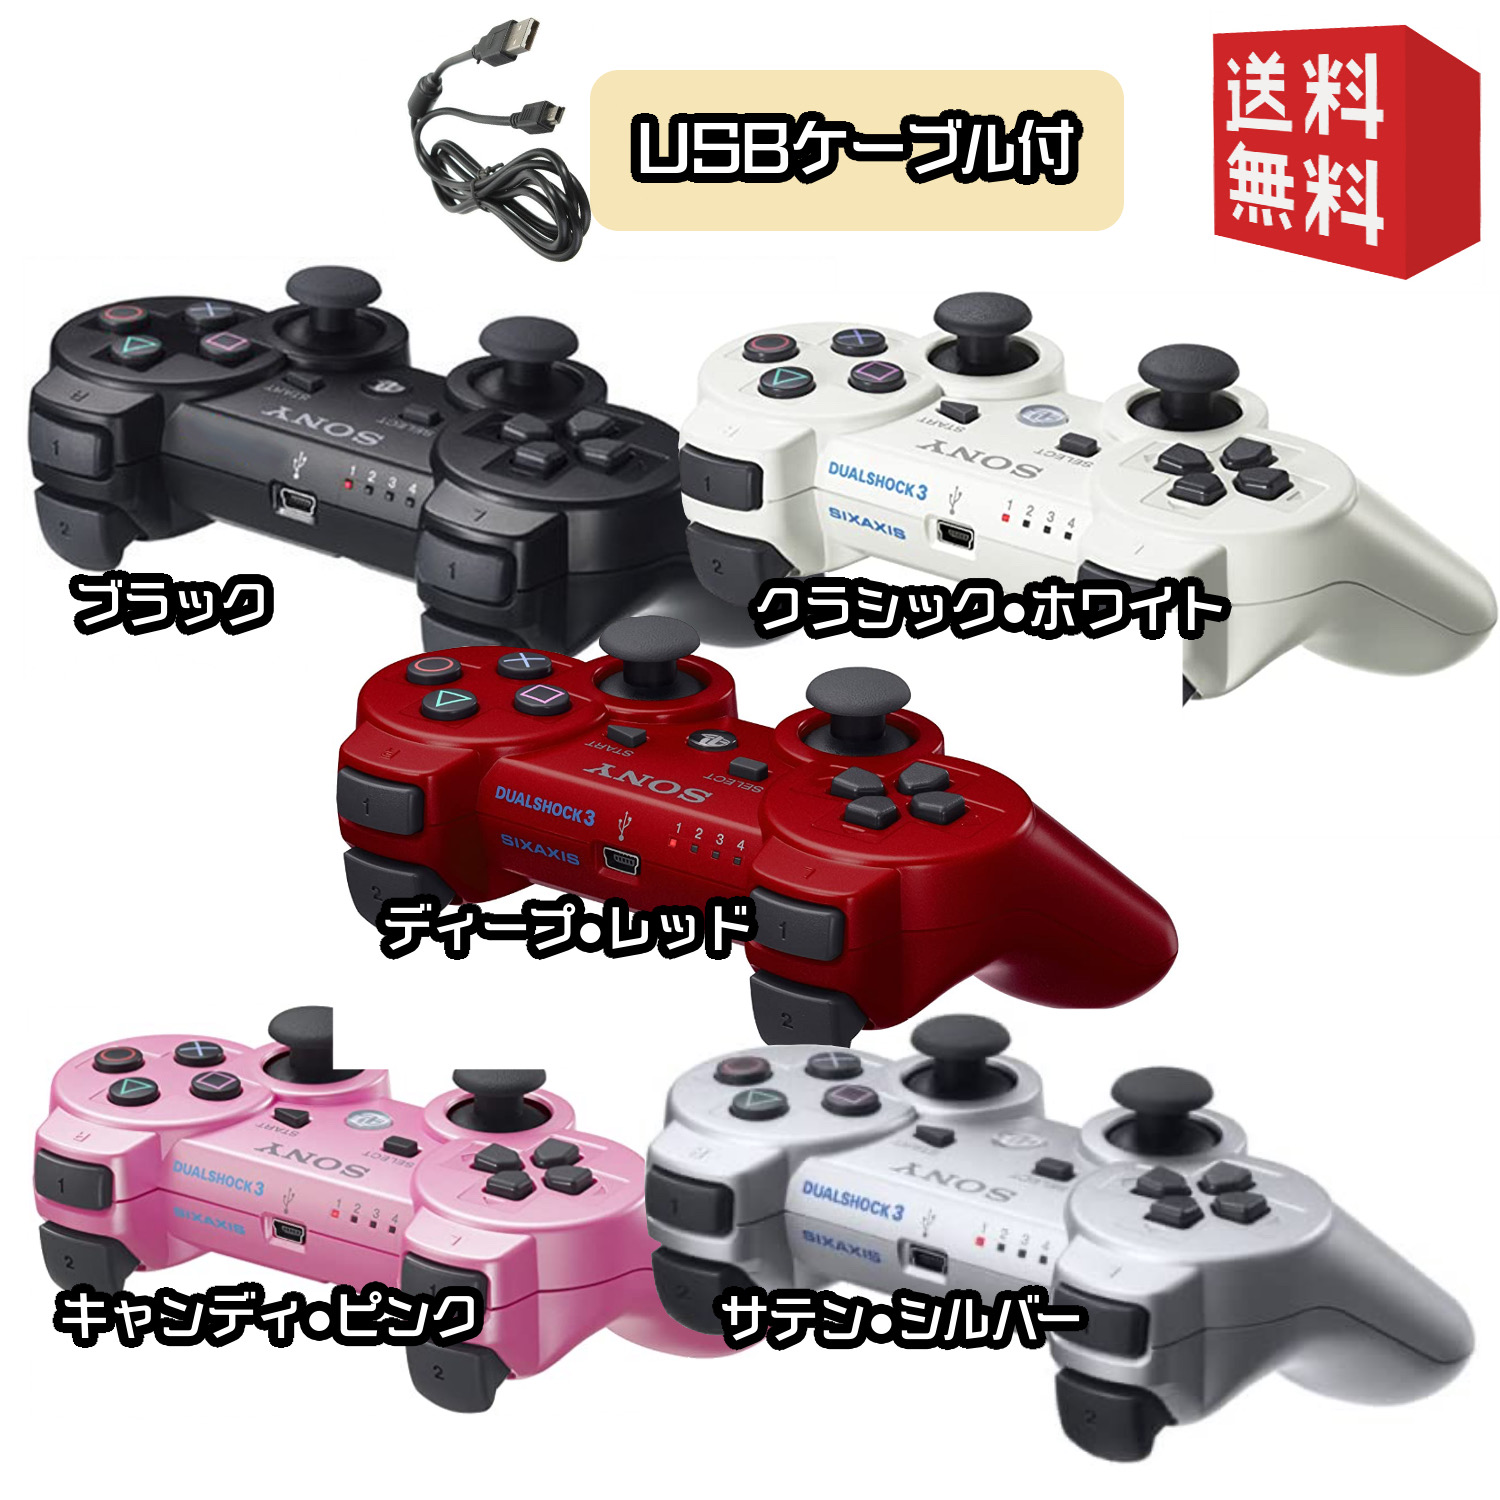 PS3 ワイヤレスコントローラ DUALSHOCK3 開催中 正規認証品 新規格 選べるカラー５色